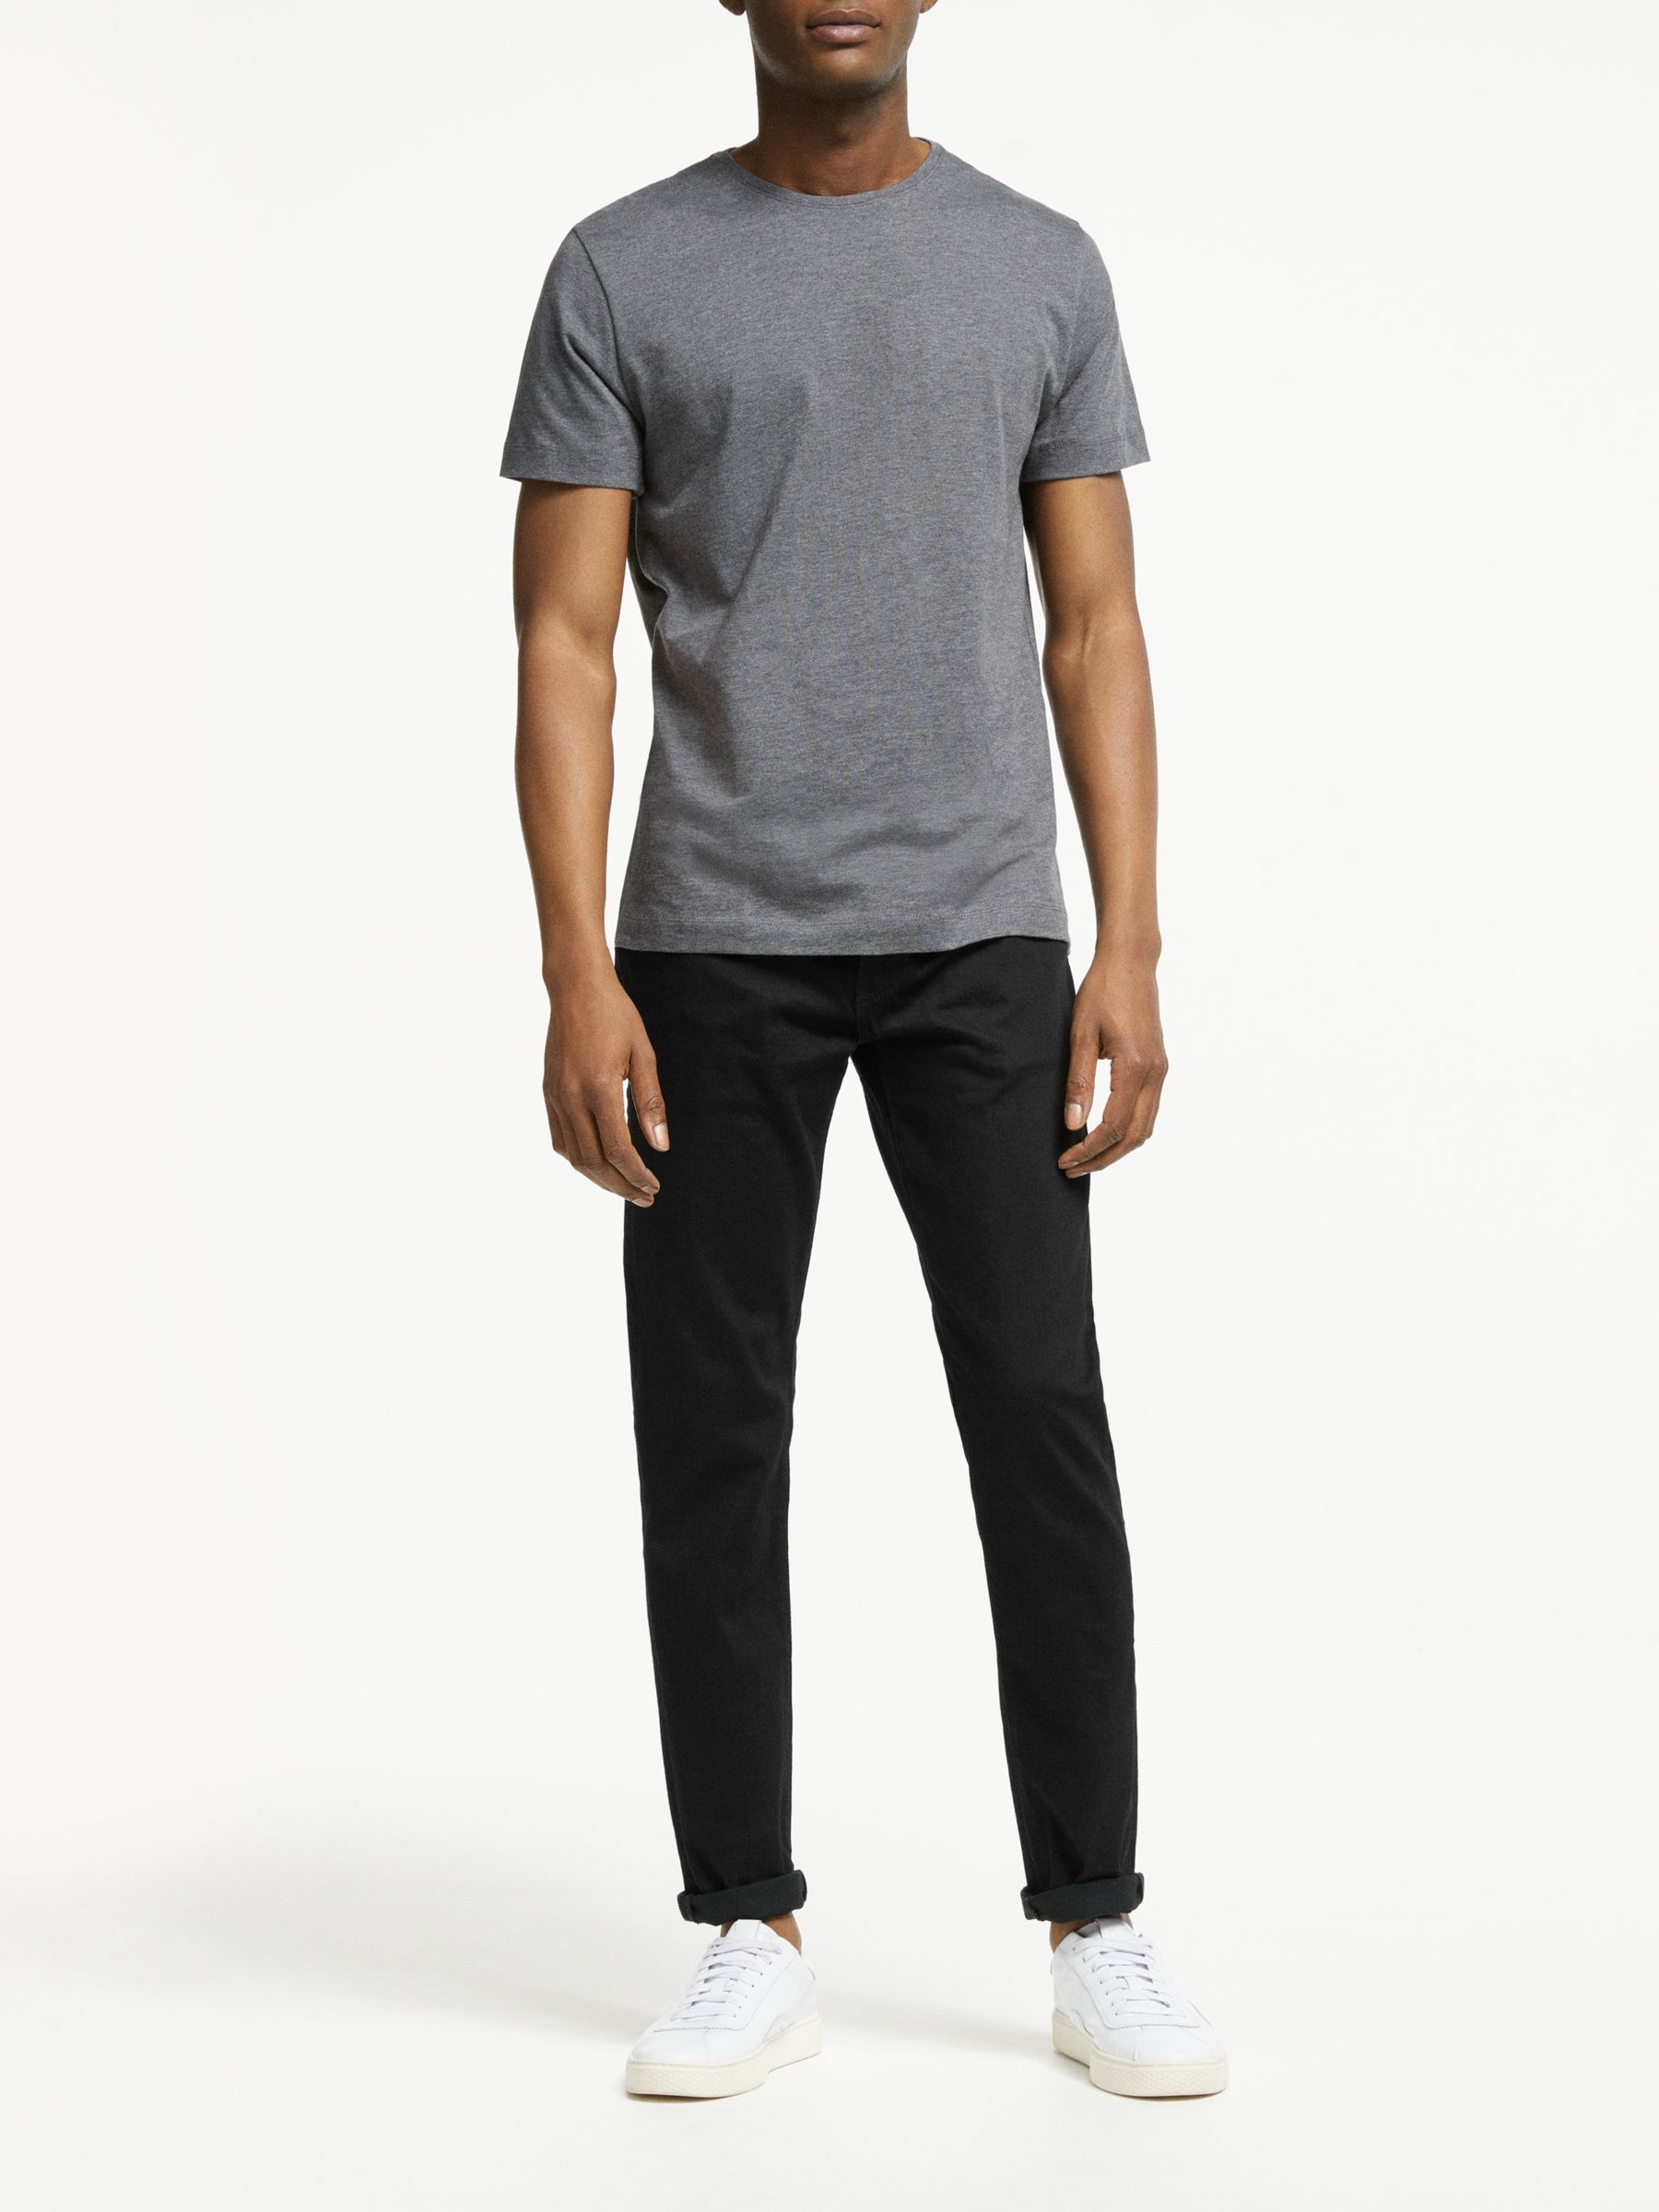 Buy Levi's 512 Slim Tapered Jeans, Rock Cod Online at johnlewis.com